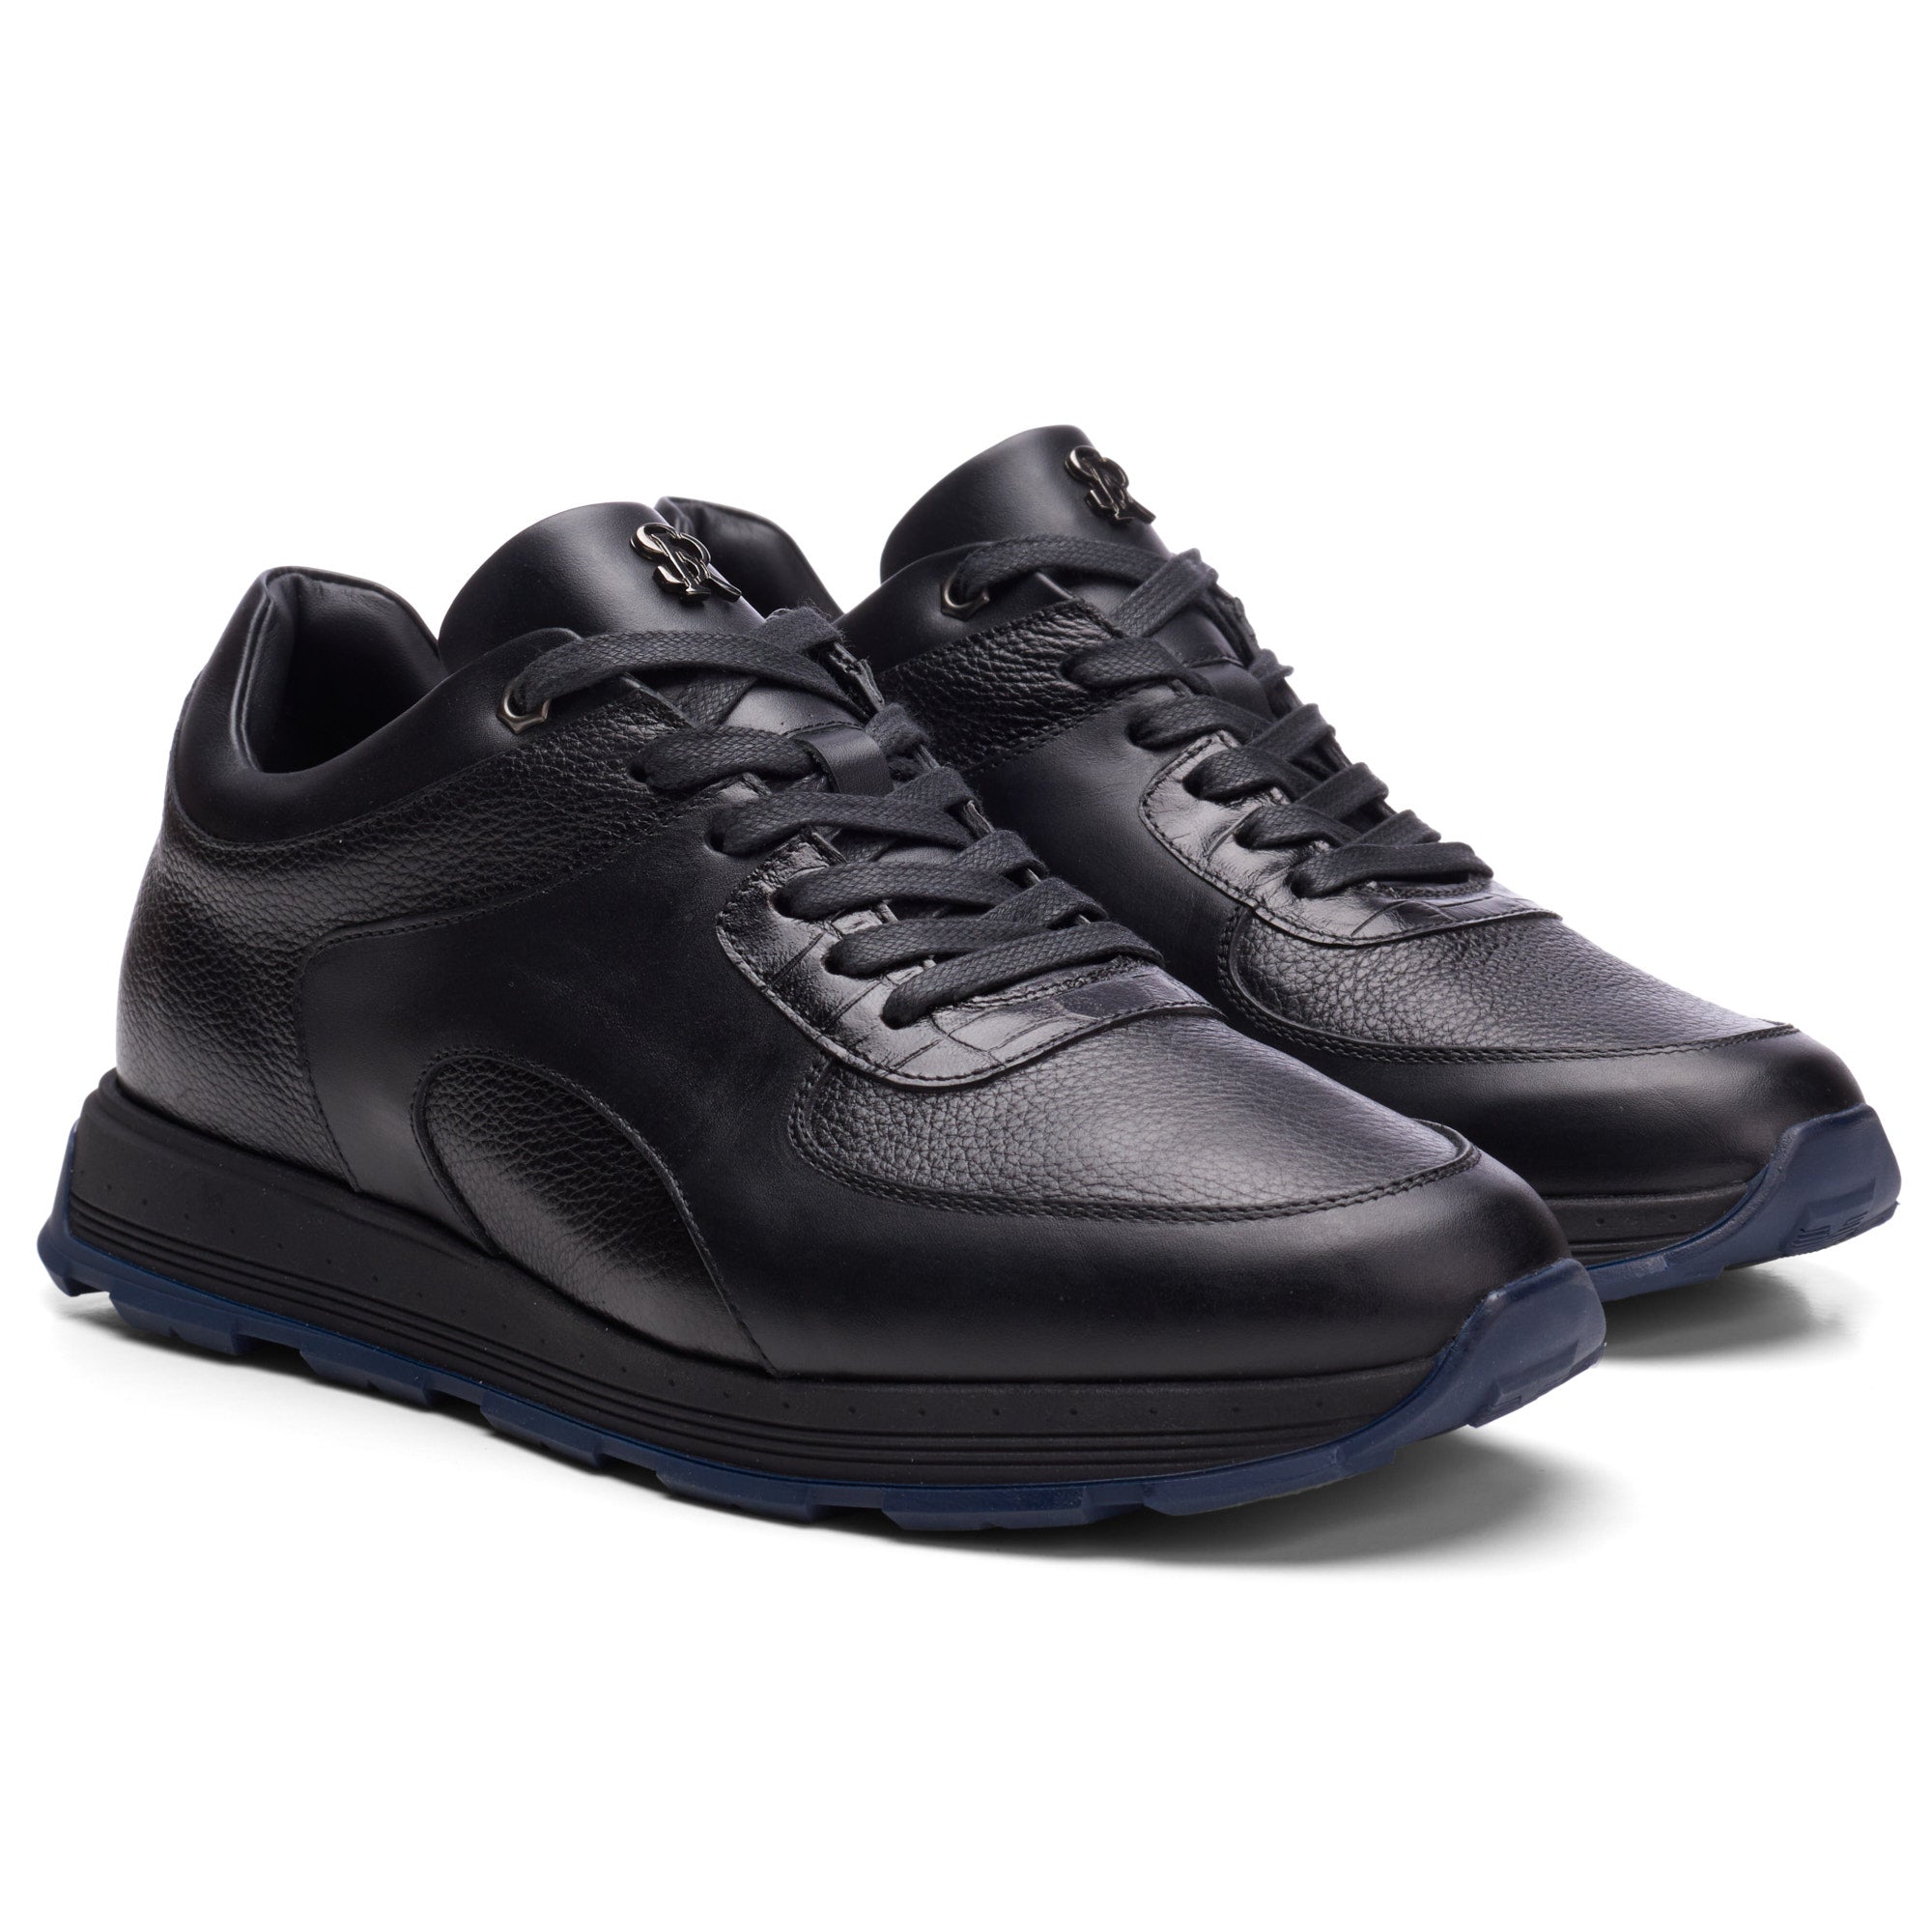 STEFANO RICCI Black Calfskin Leather Croco Trim Sneaker Shoes EU 41 US ...